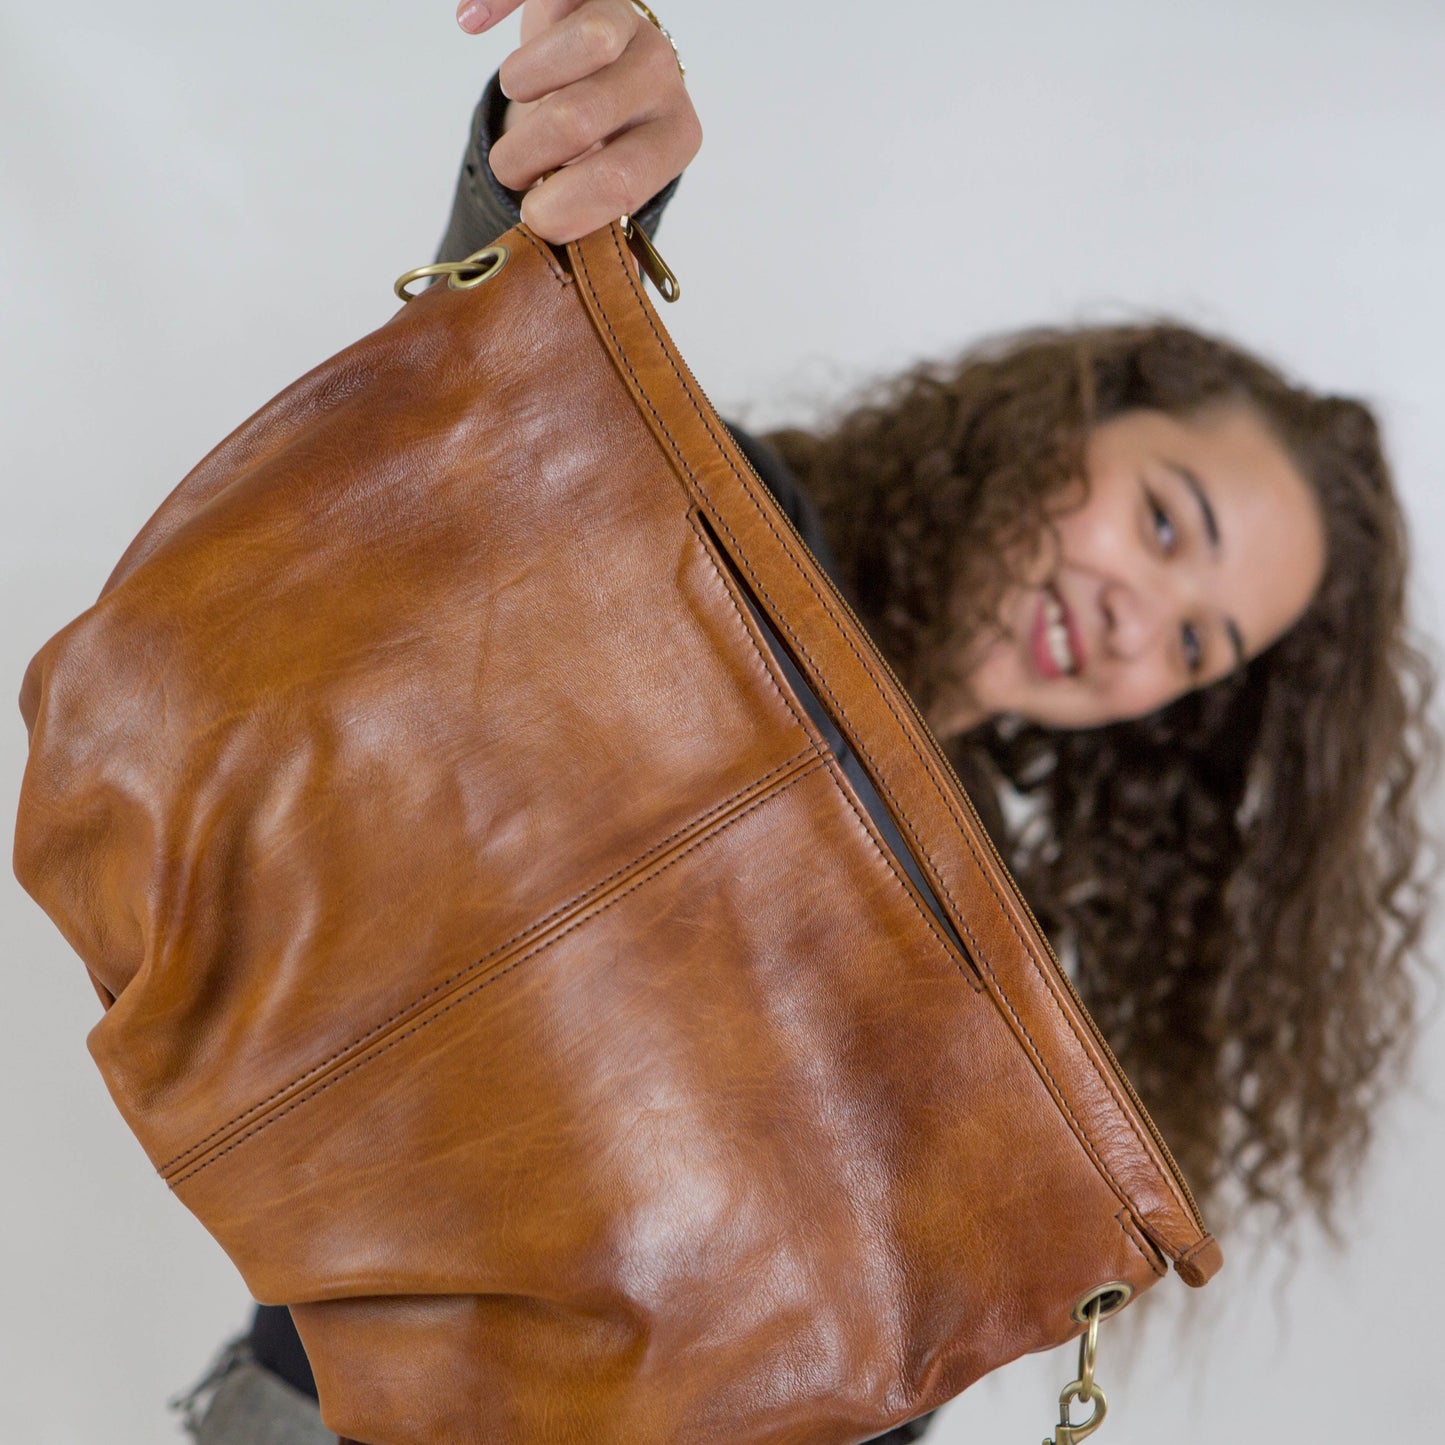 Leather hobo bag